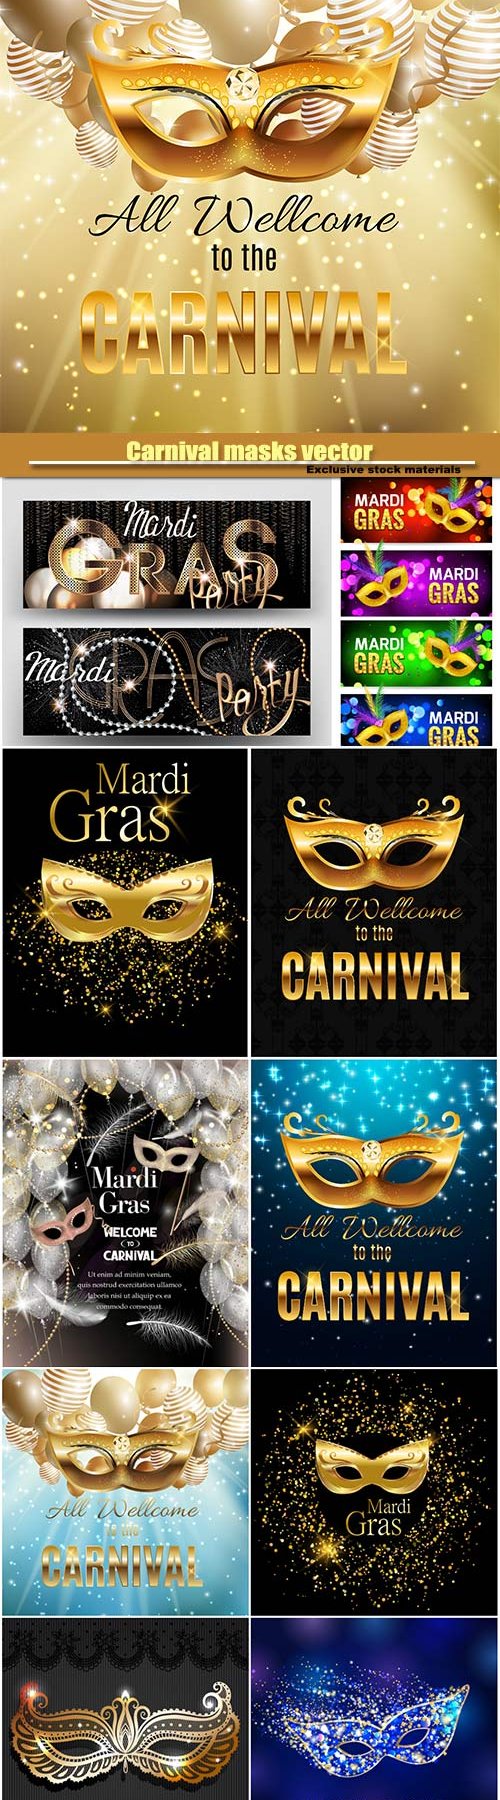 Carnival masks vector